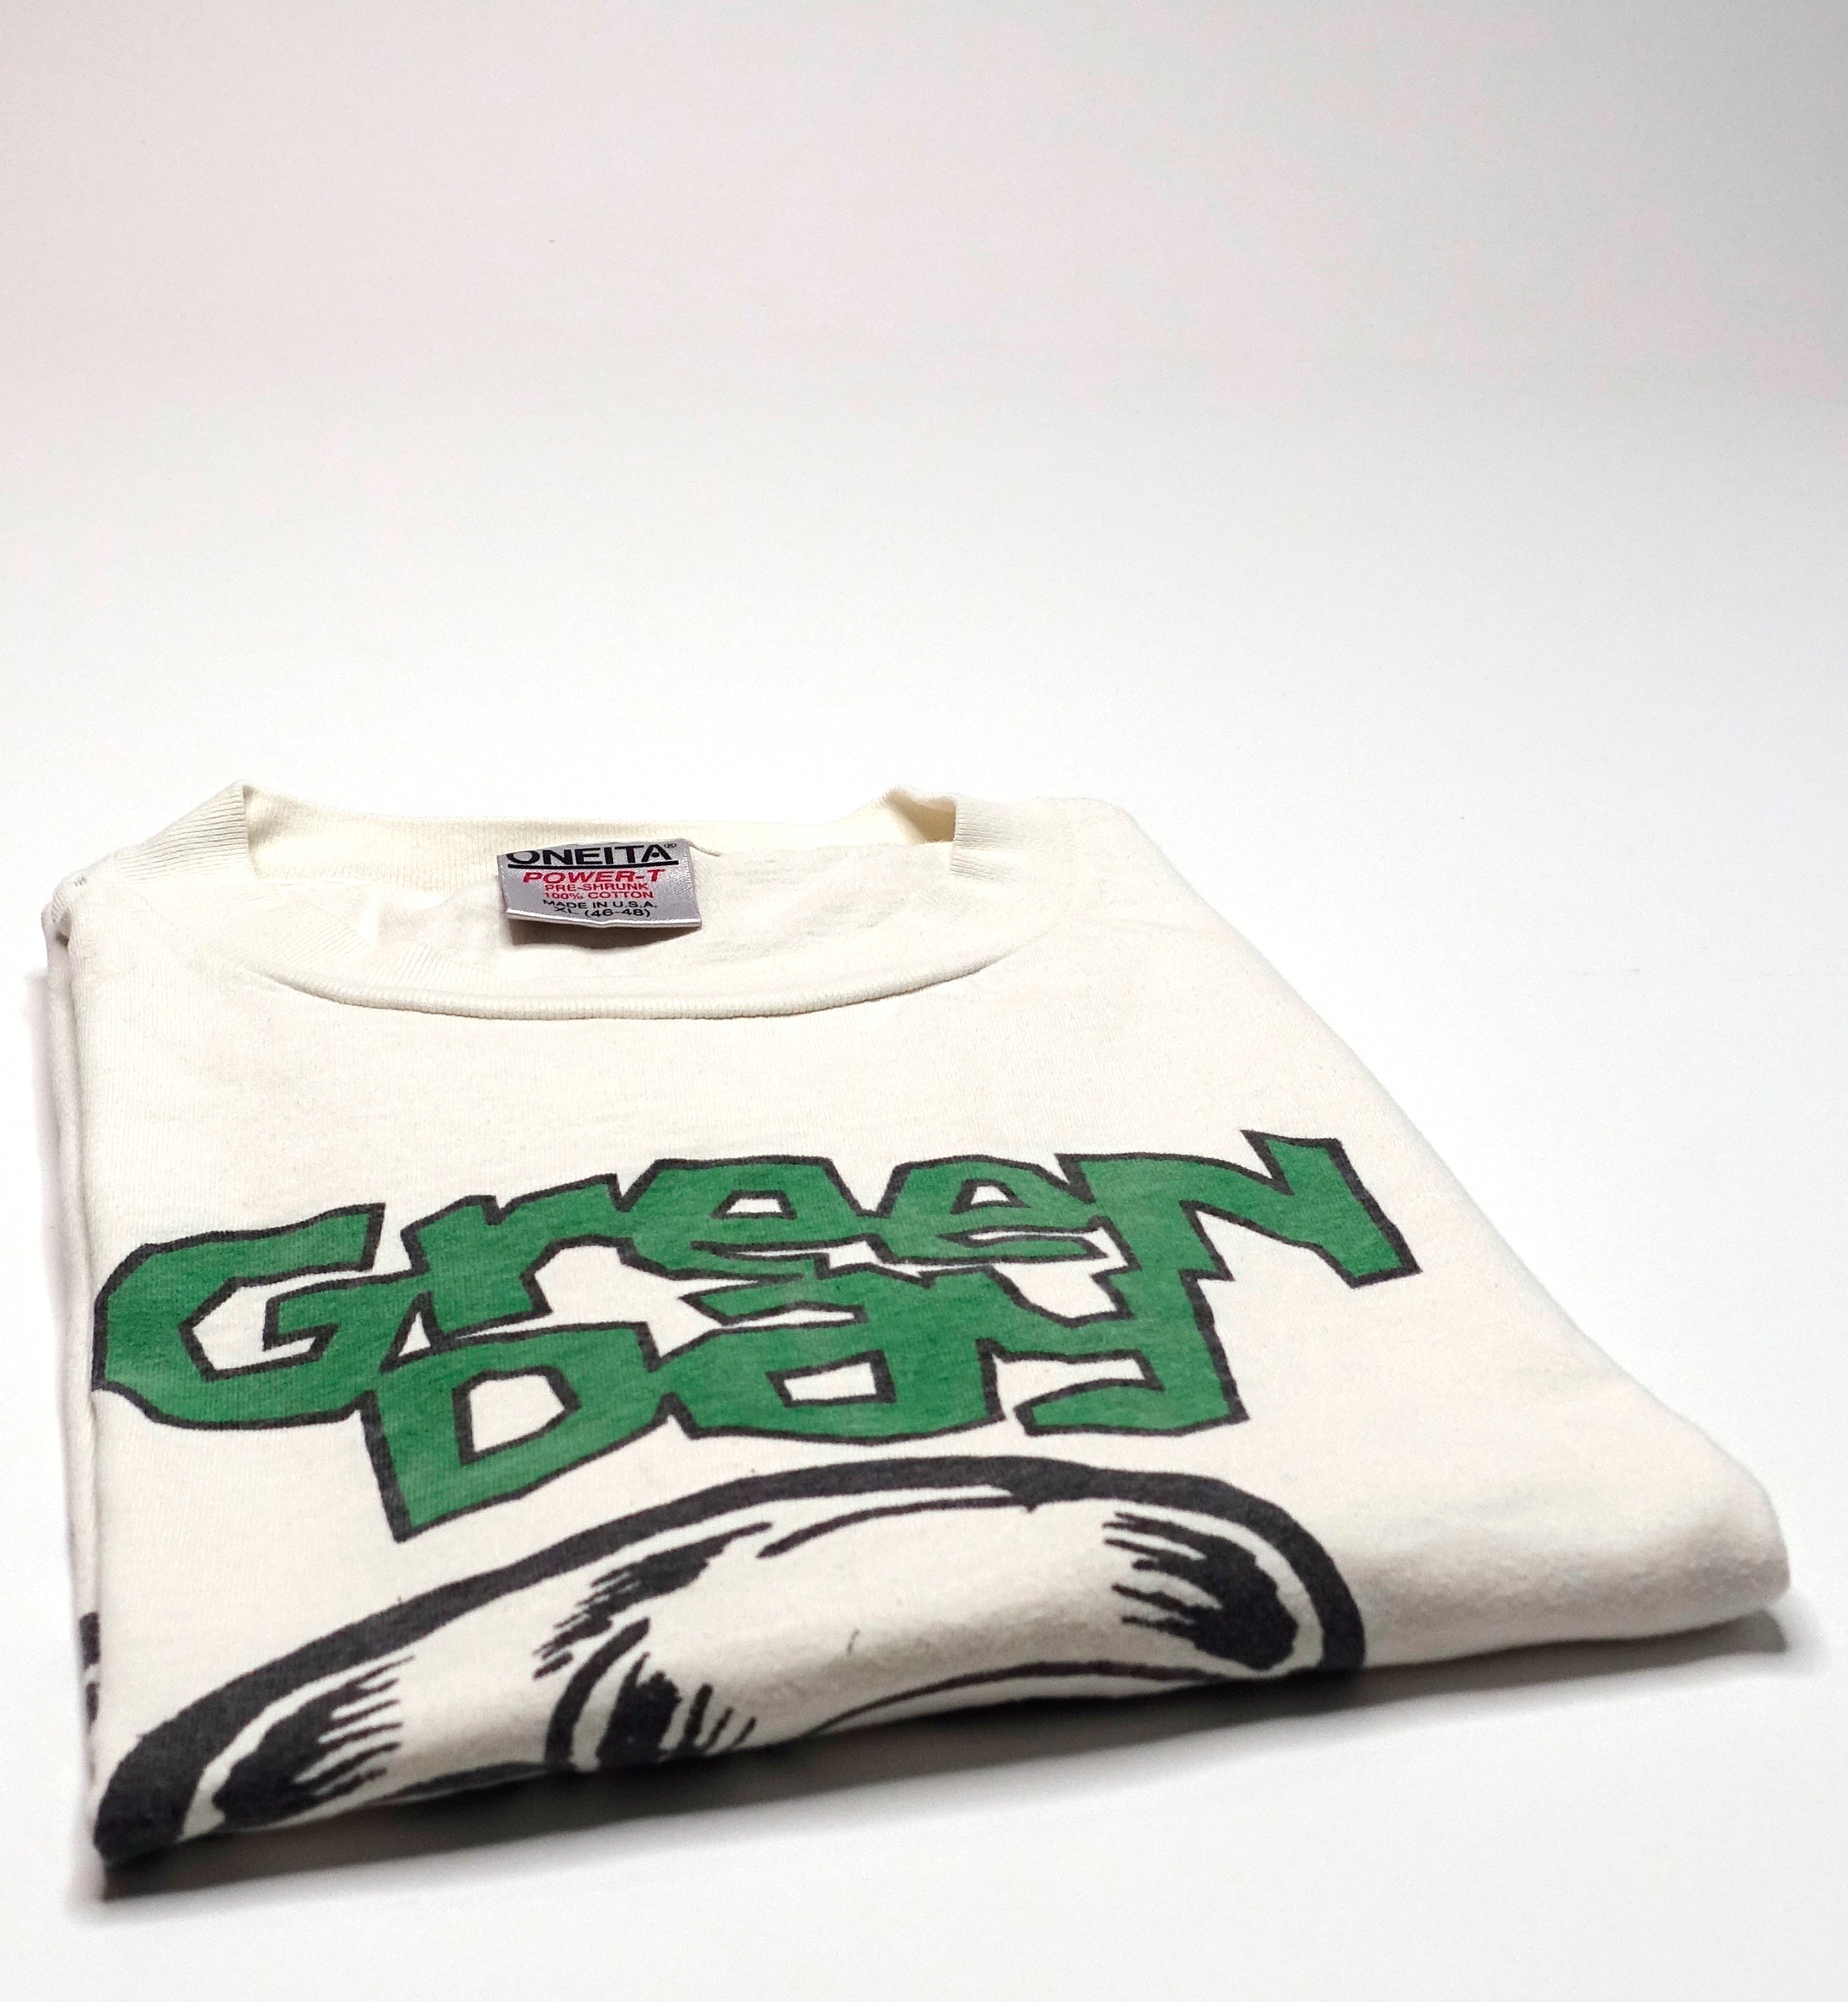 Green Day - Kerplunk Clay Face 1991 Tour Shirt Size XL